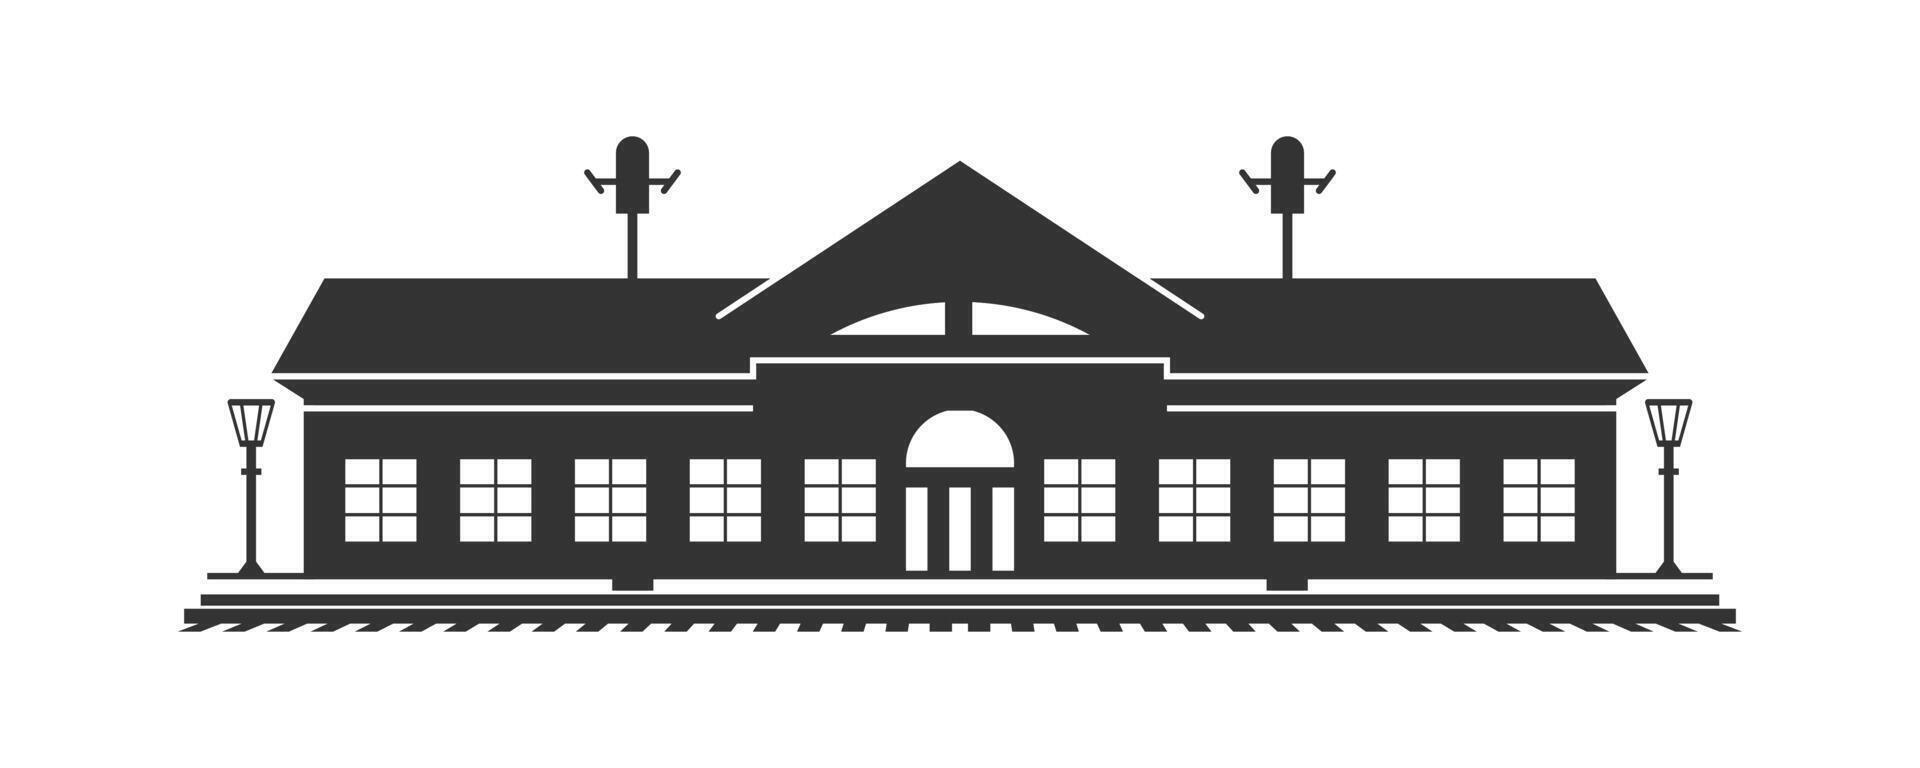 spoorweg station silhouet. vector illustratie.